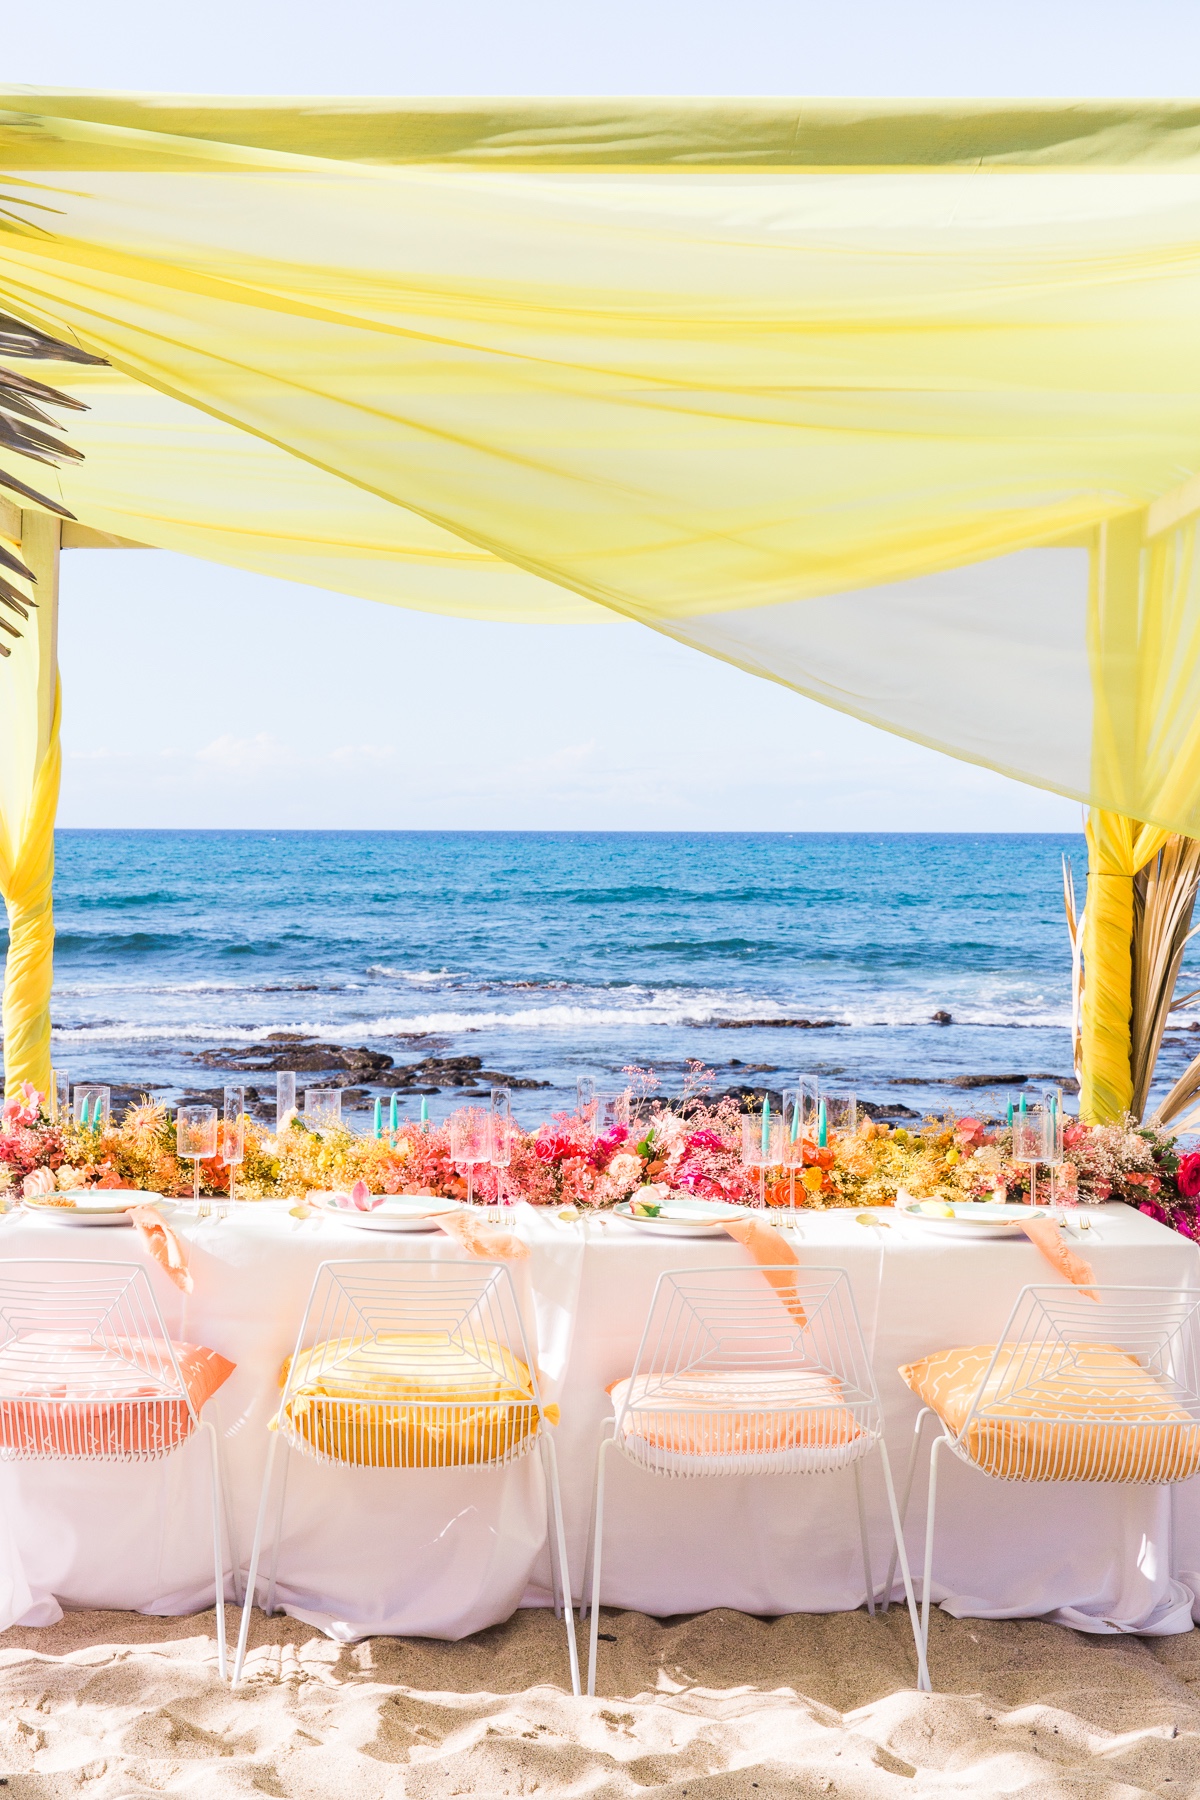 Rainbow wedding reception at the beach